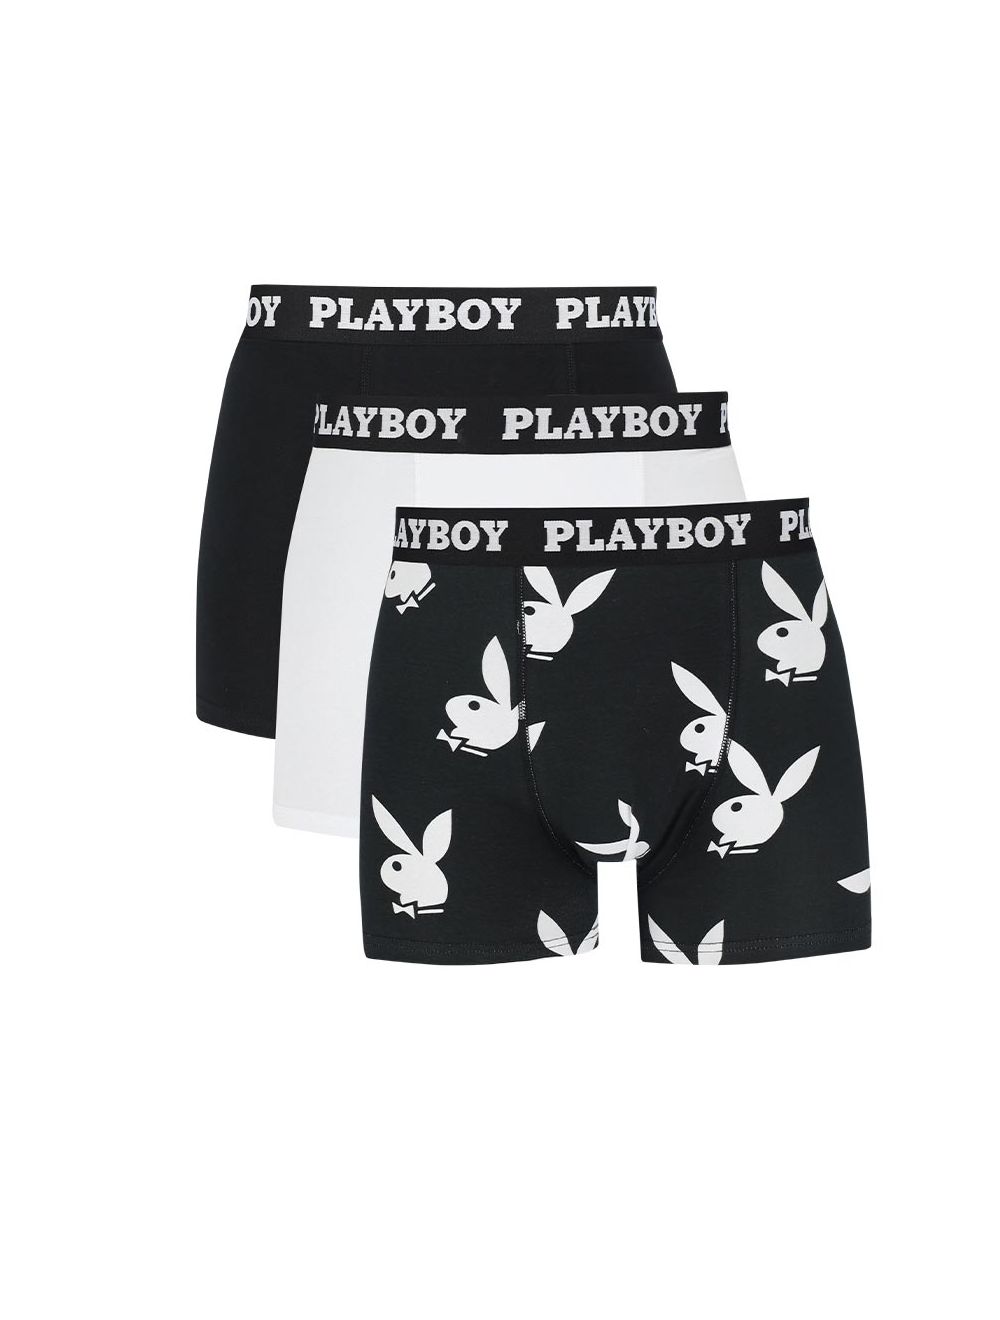 Playboy Solid Big RHD 3 Pack Mens Jersey Trunks Black/White